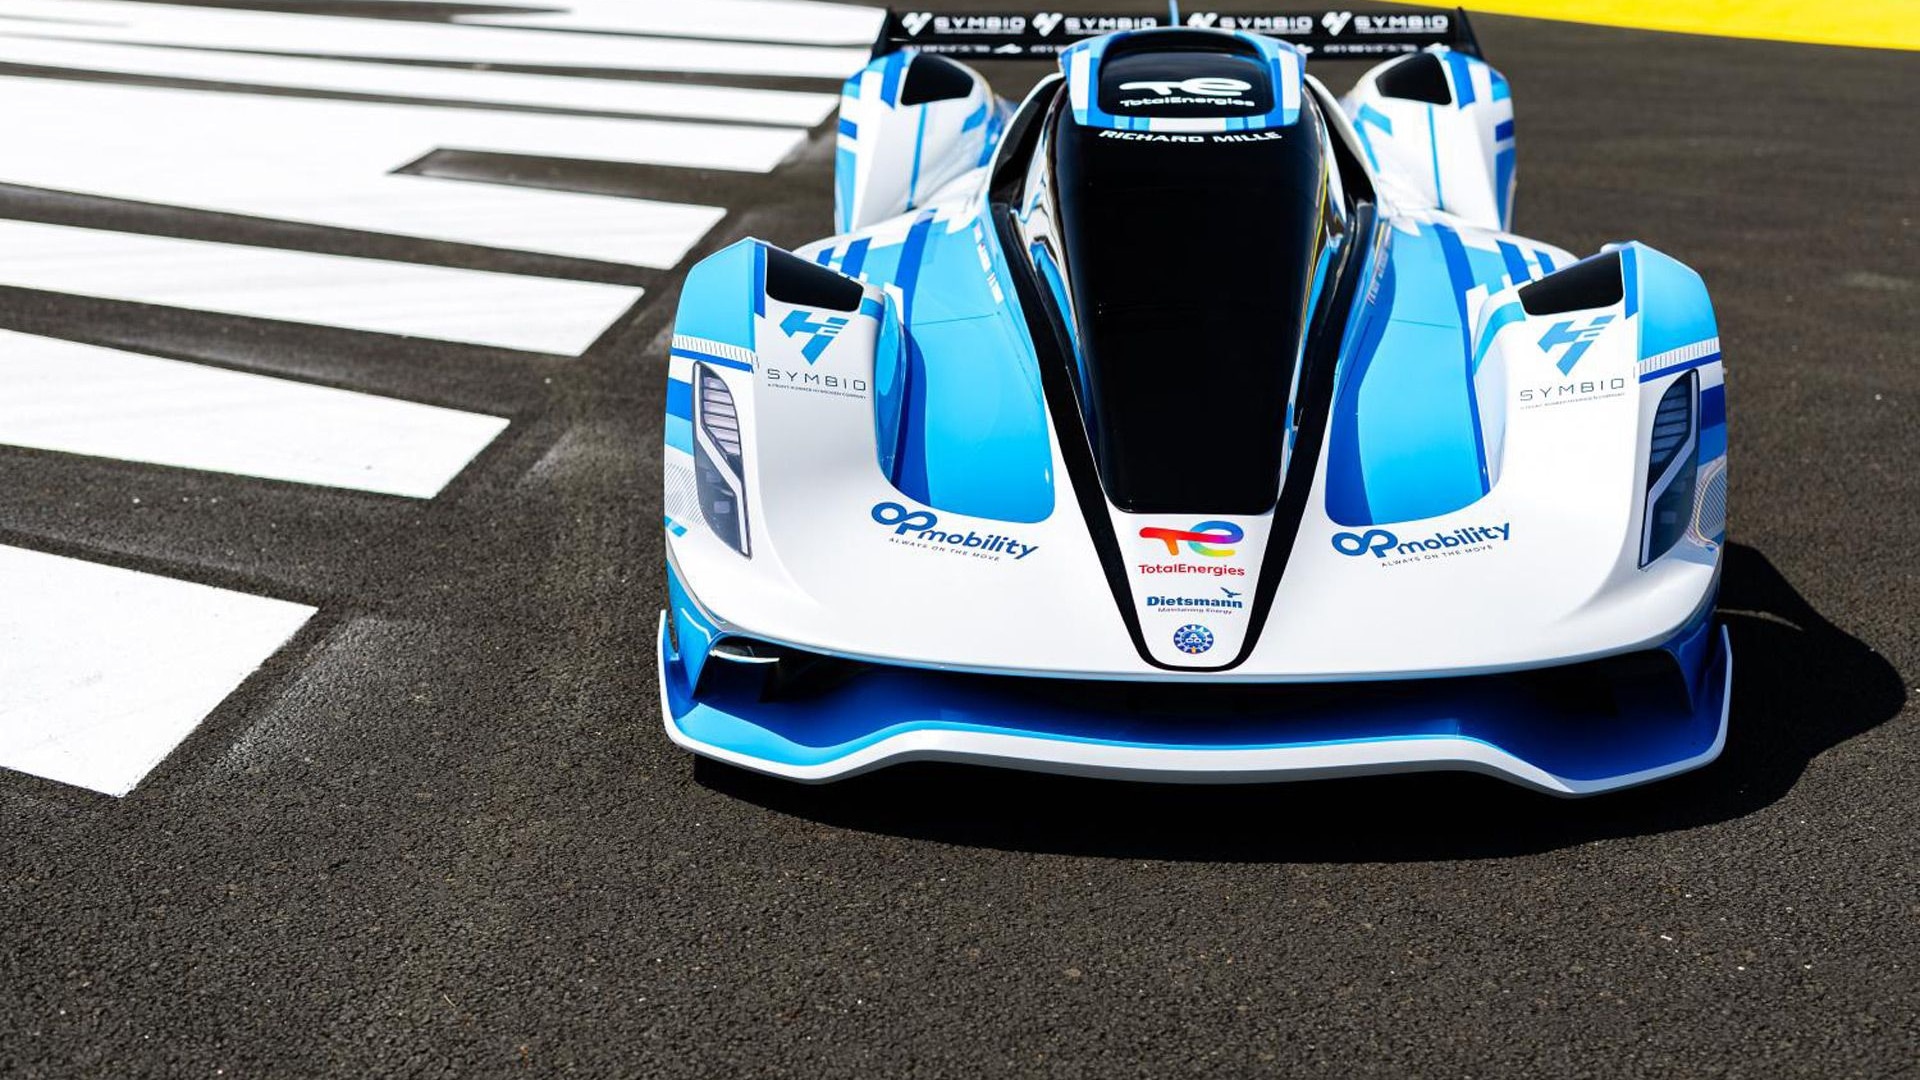 MissionH24 Evo hydrogen-electric race car concept